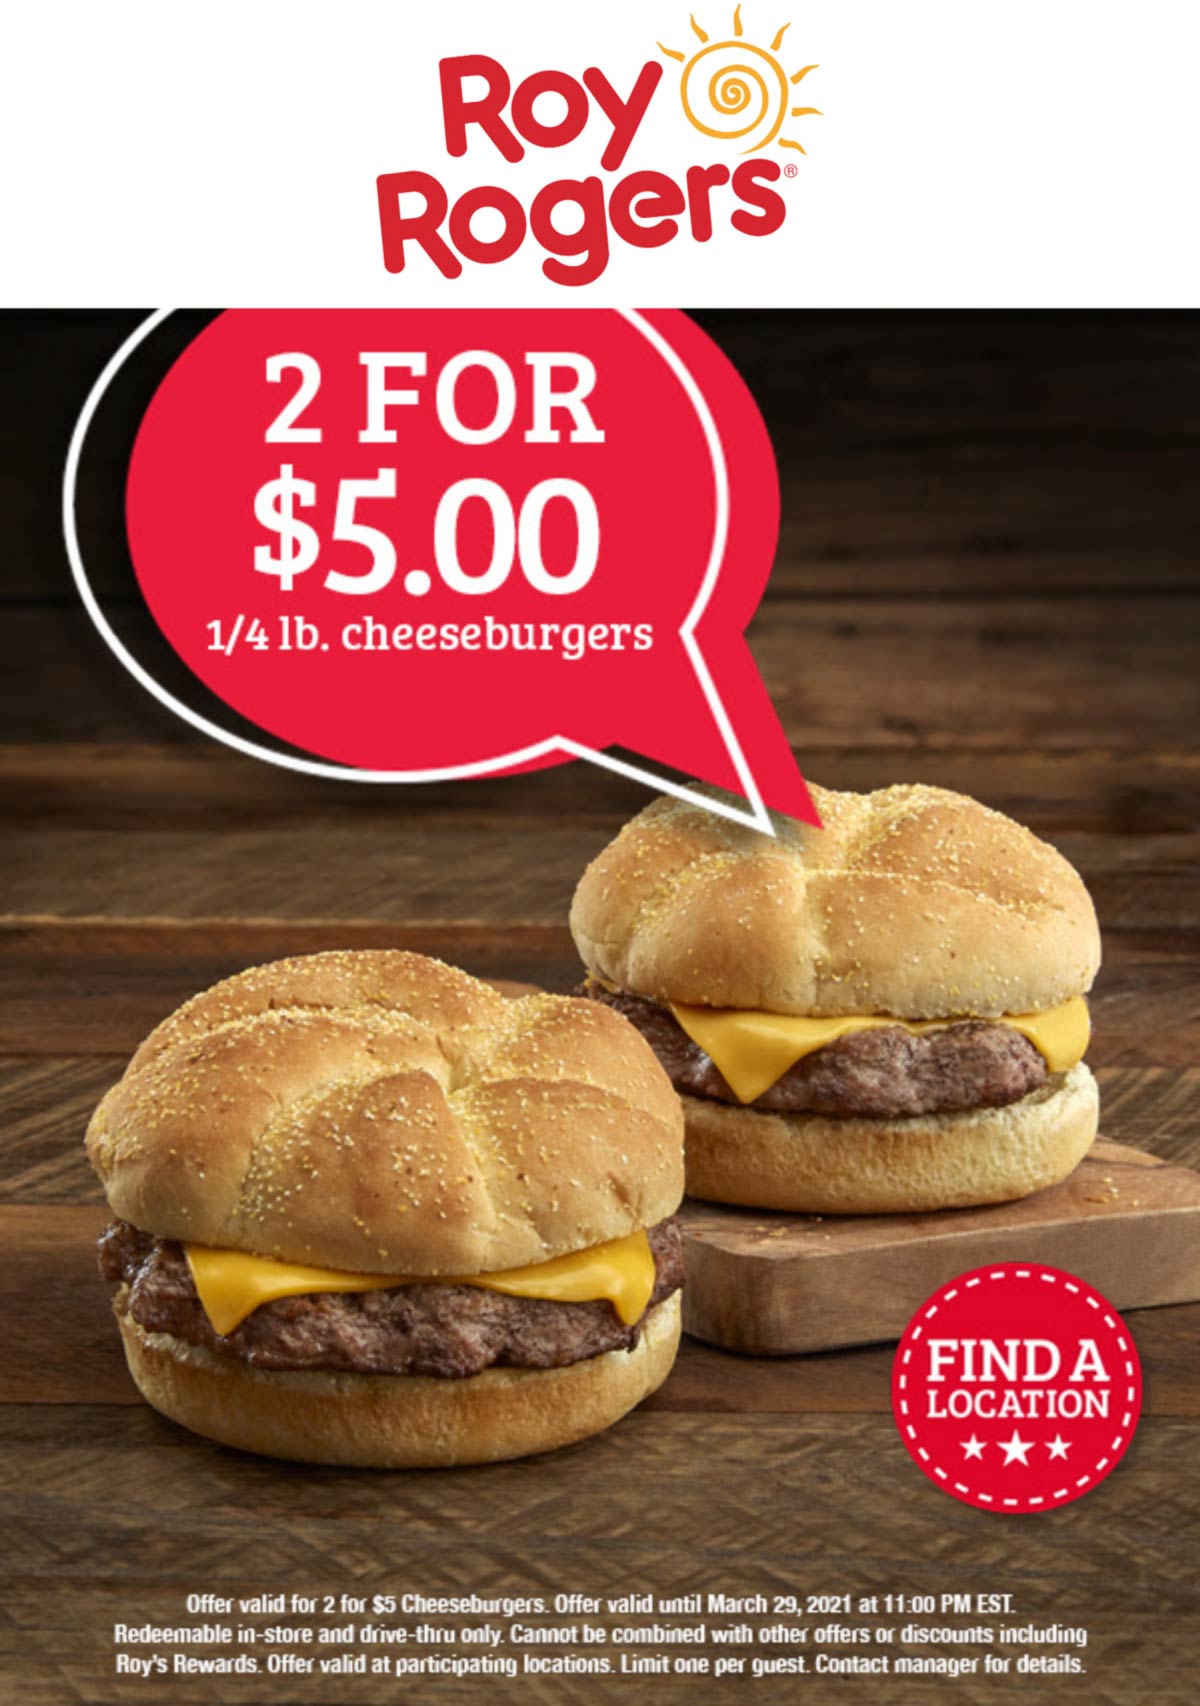 Roy Rogers restaurants Coupon  2 cheeseburgers for $5 today at Roy Rogers restaurants #royrogers 